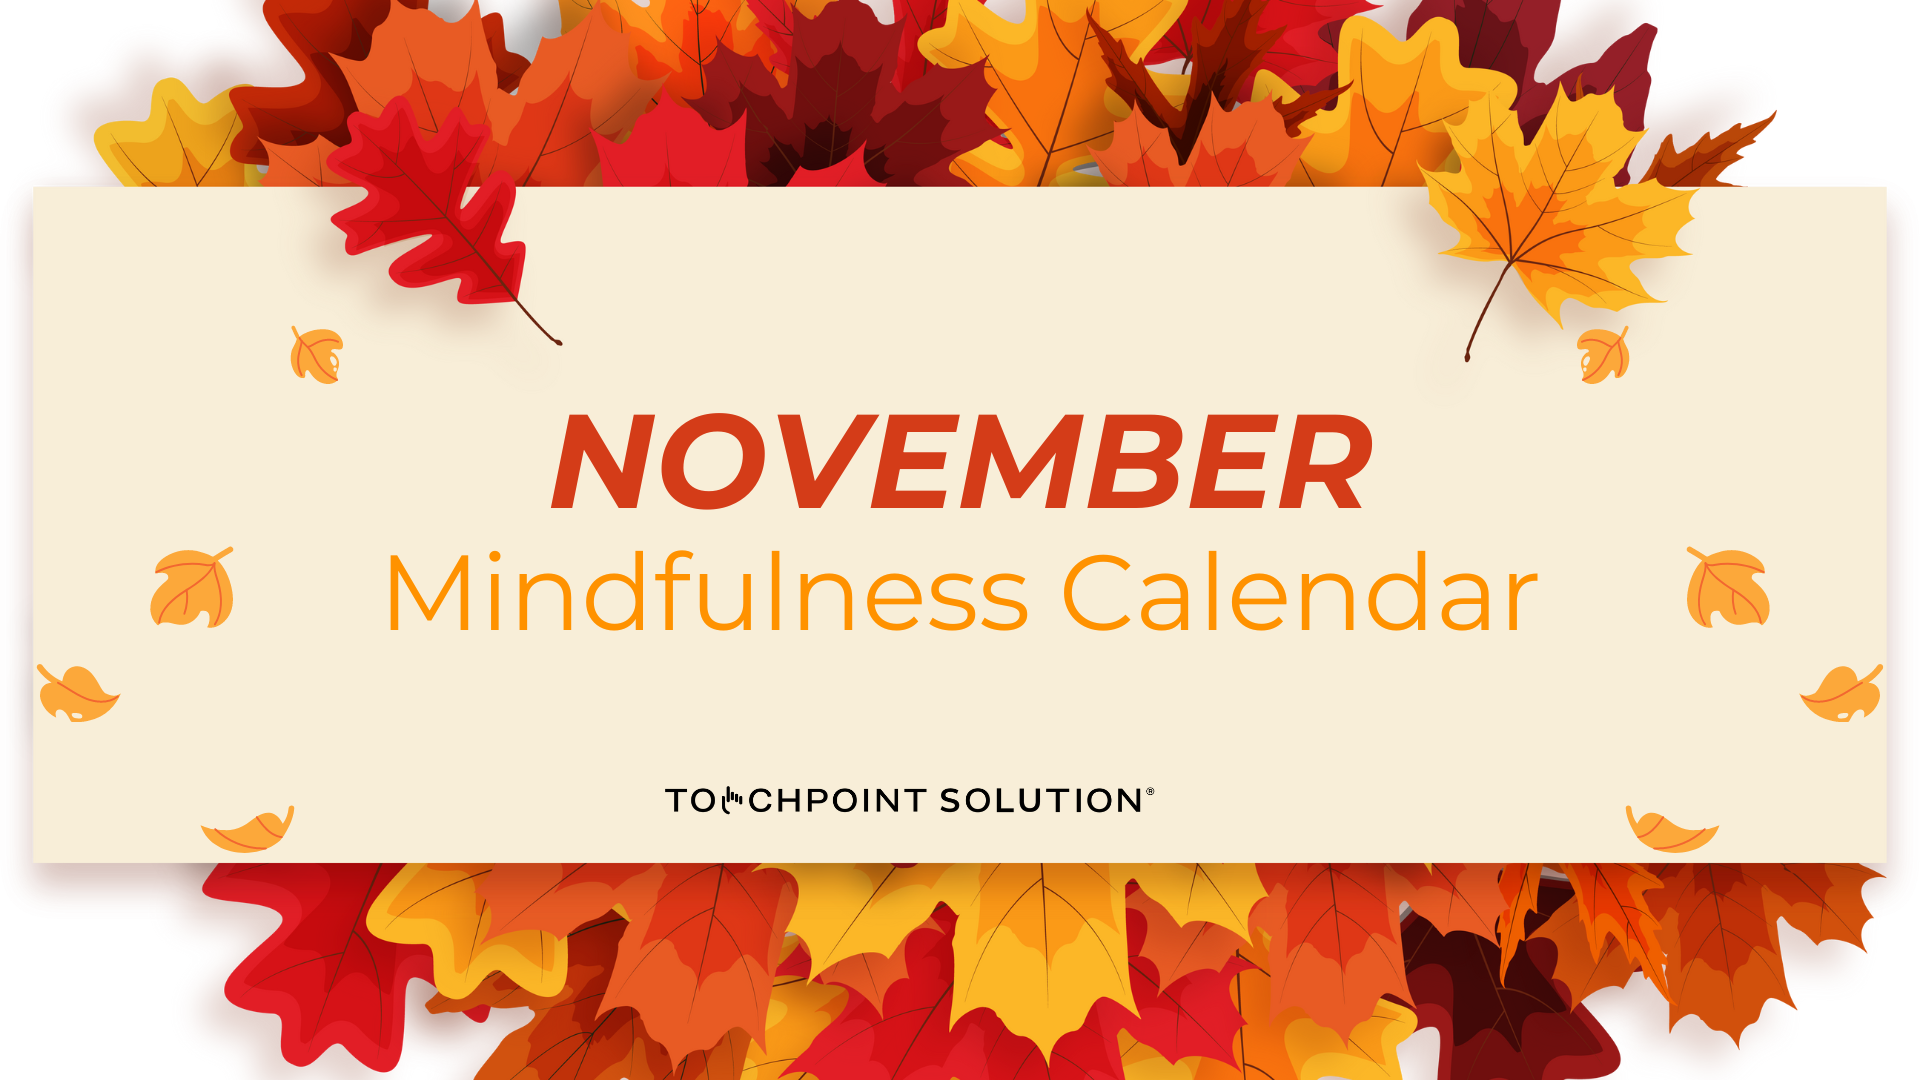 The November 2022 Mindfulness Calendar is Here!